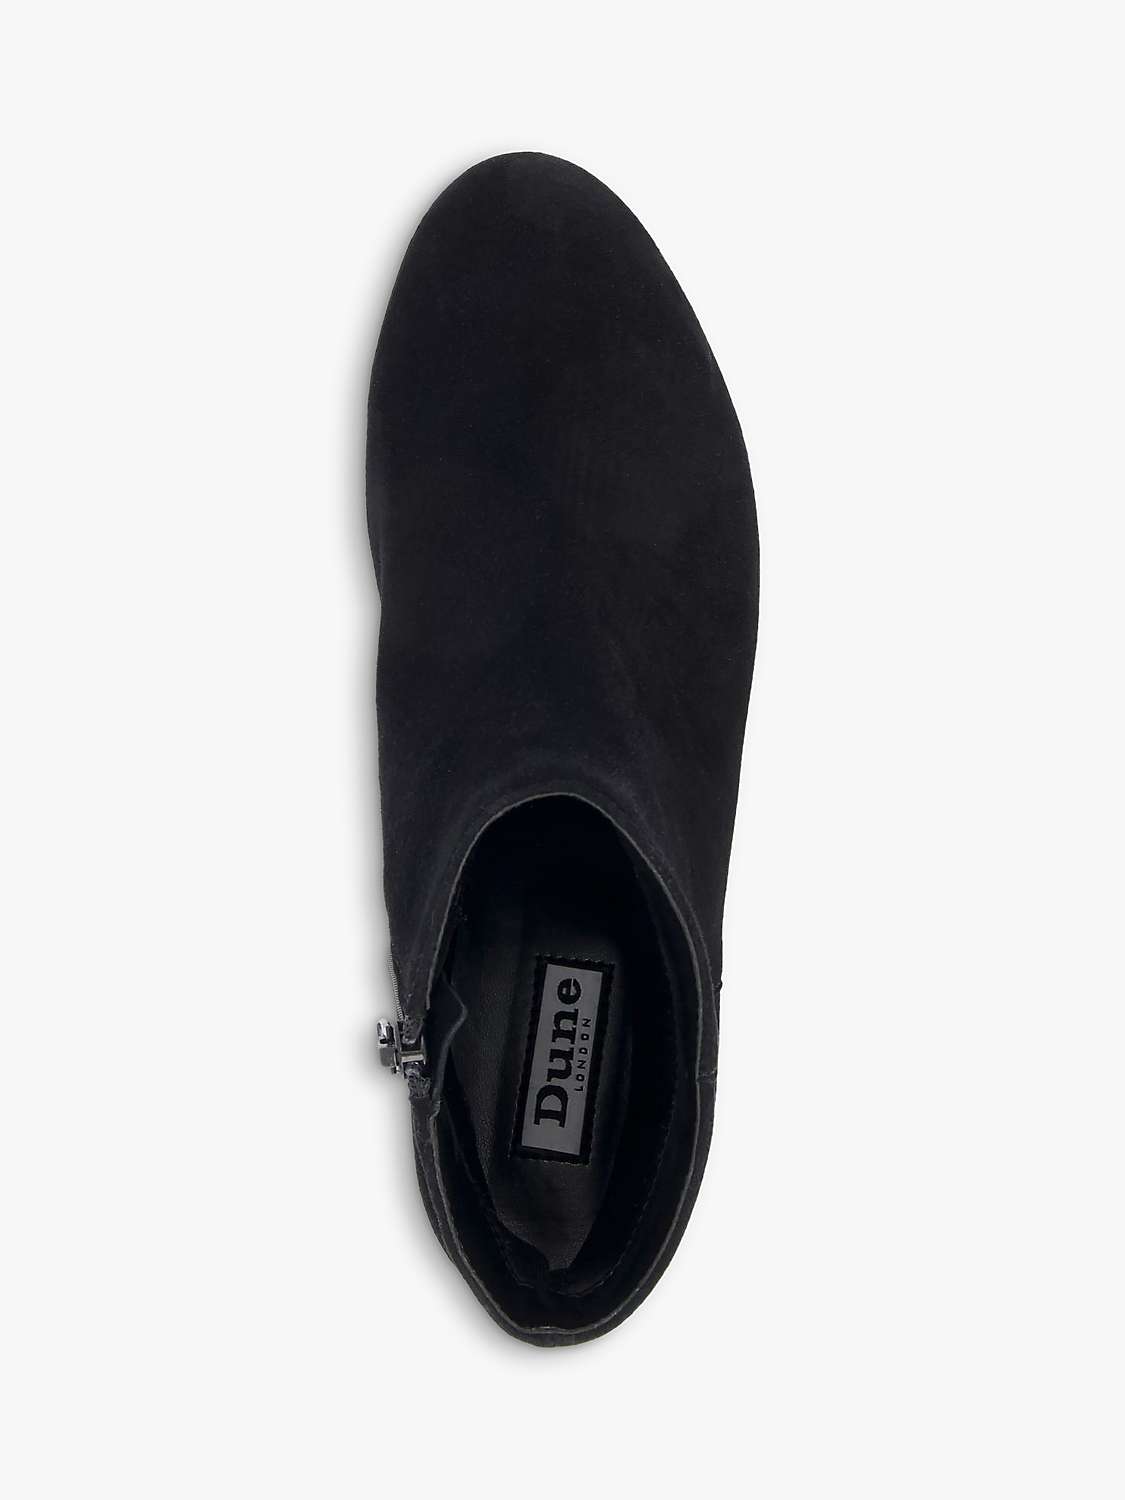 Buy Dune Pippie Suede Block Heel Ankle Boots, Black Online at johnlewis.com